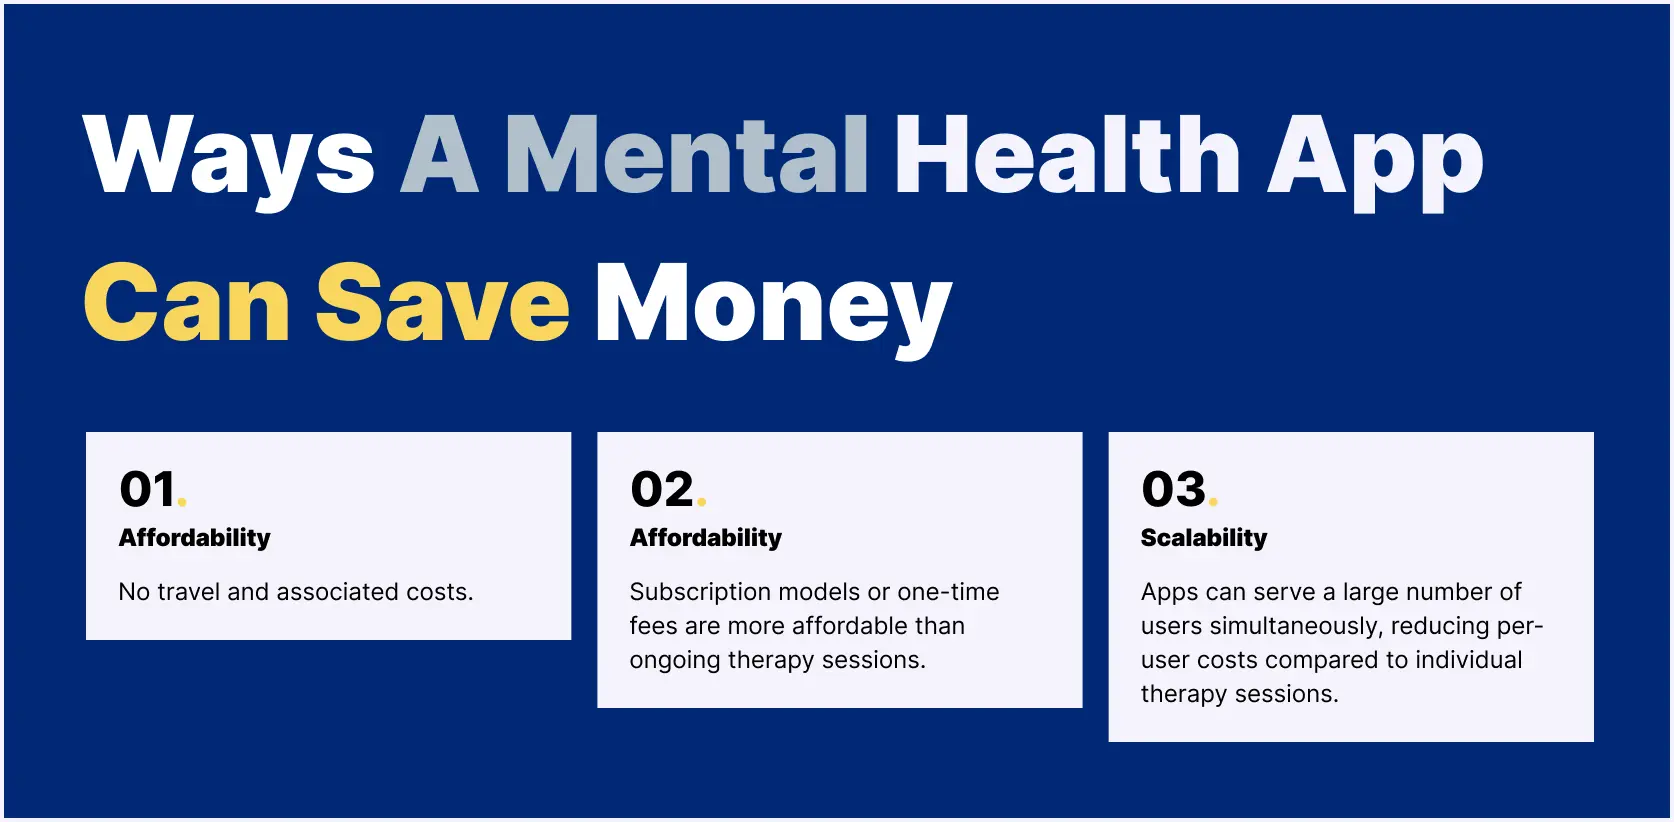 Ways A Mental Health App Can Save Money.webp